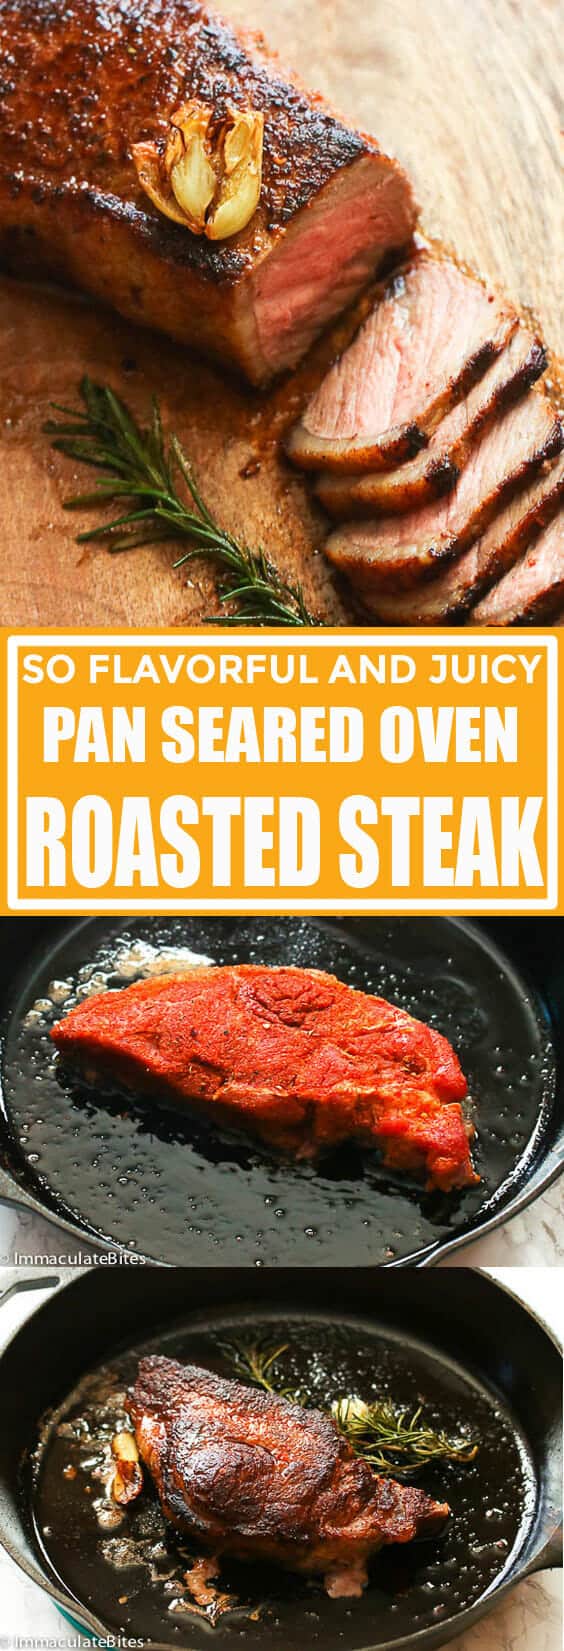 Pan Seared Oven Roasted Steak